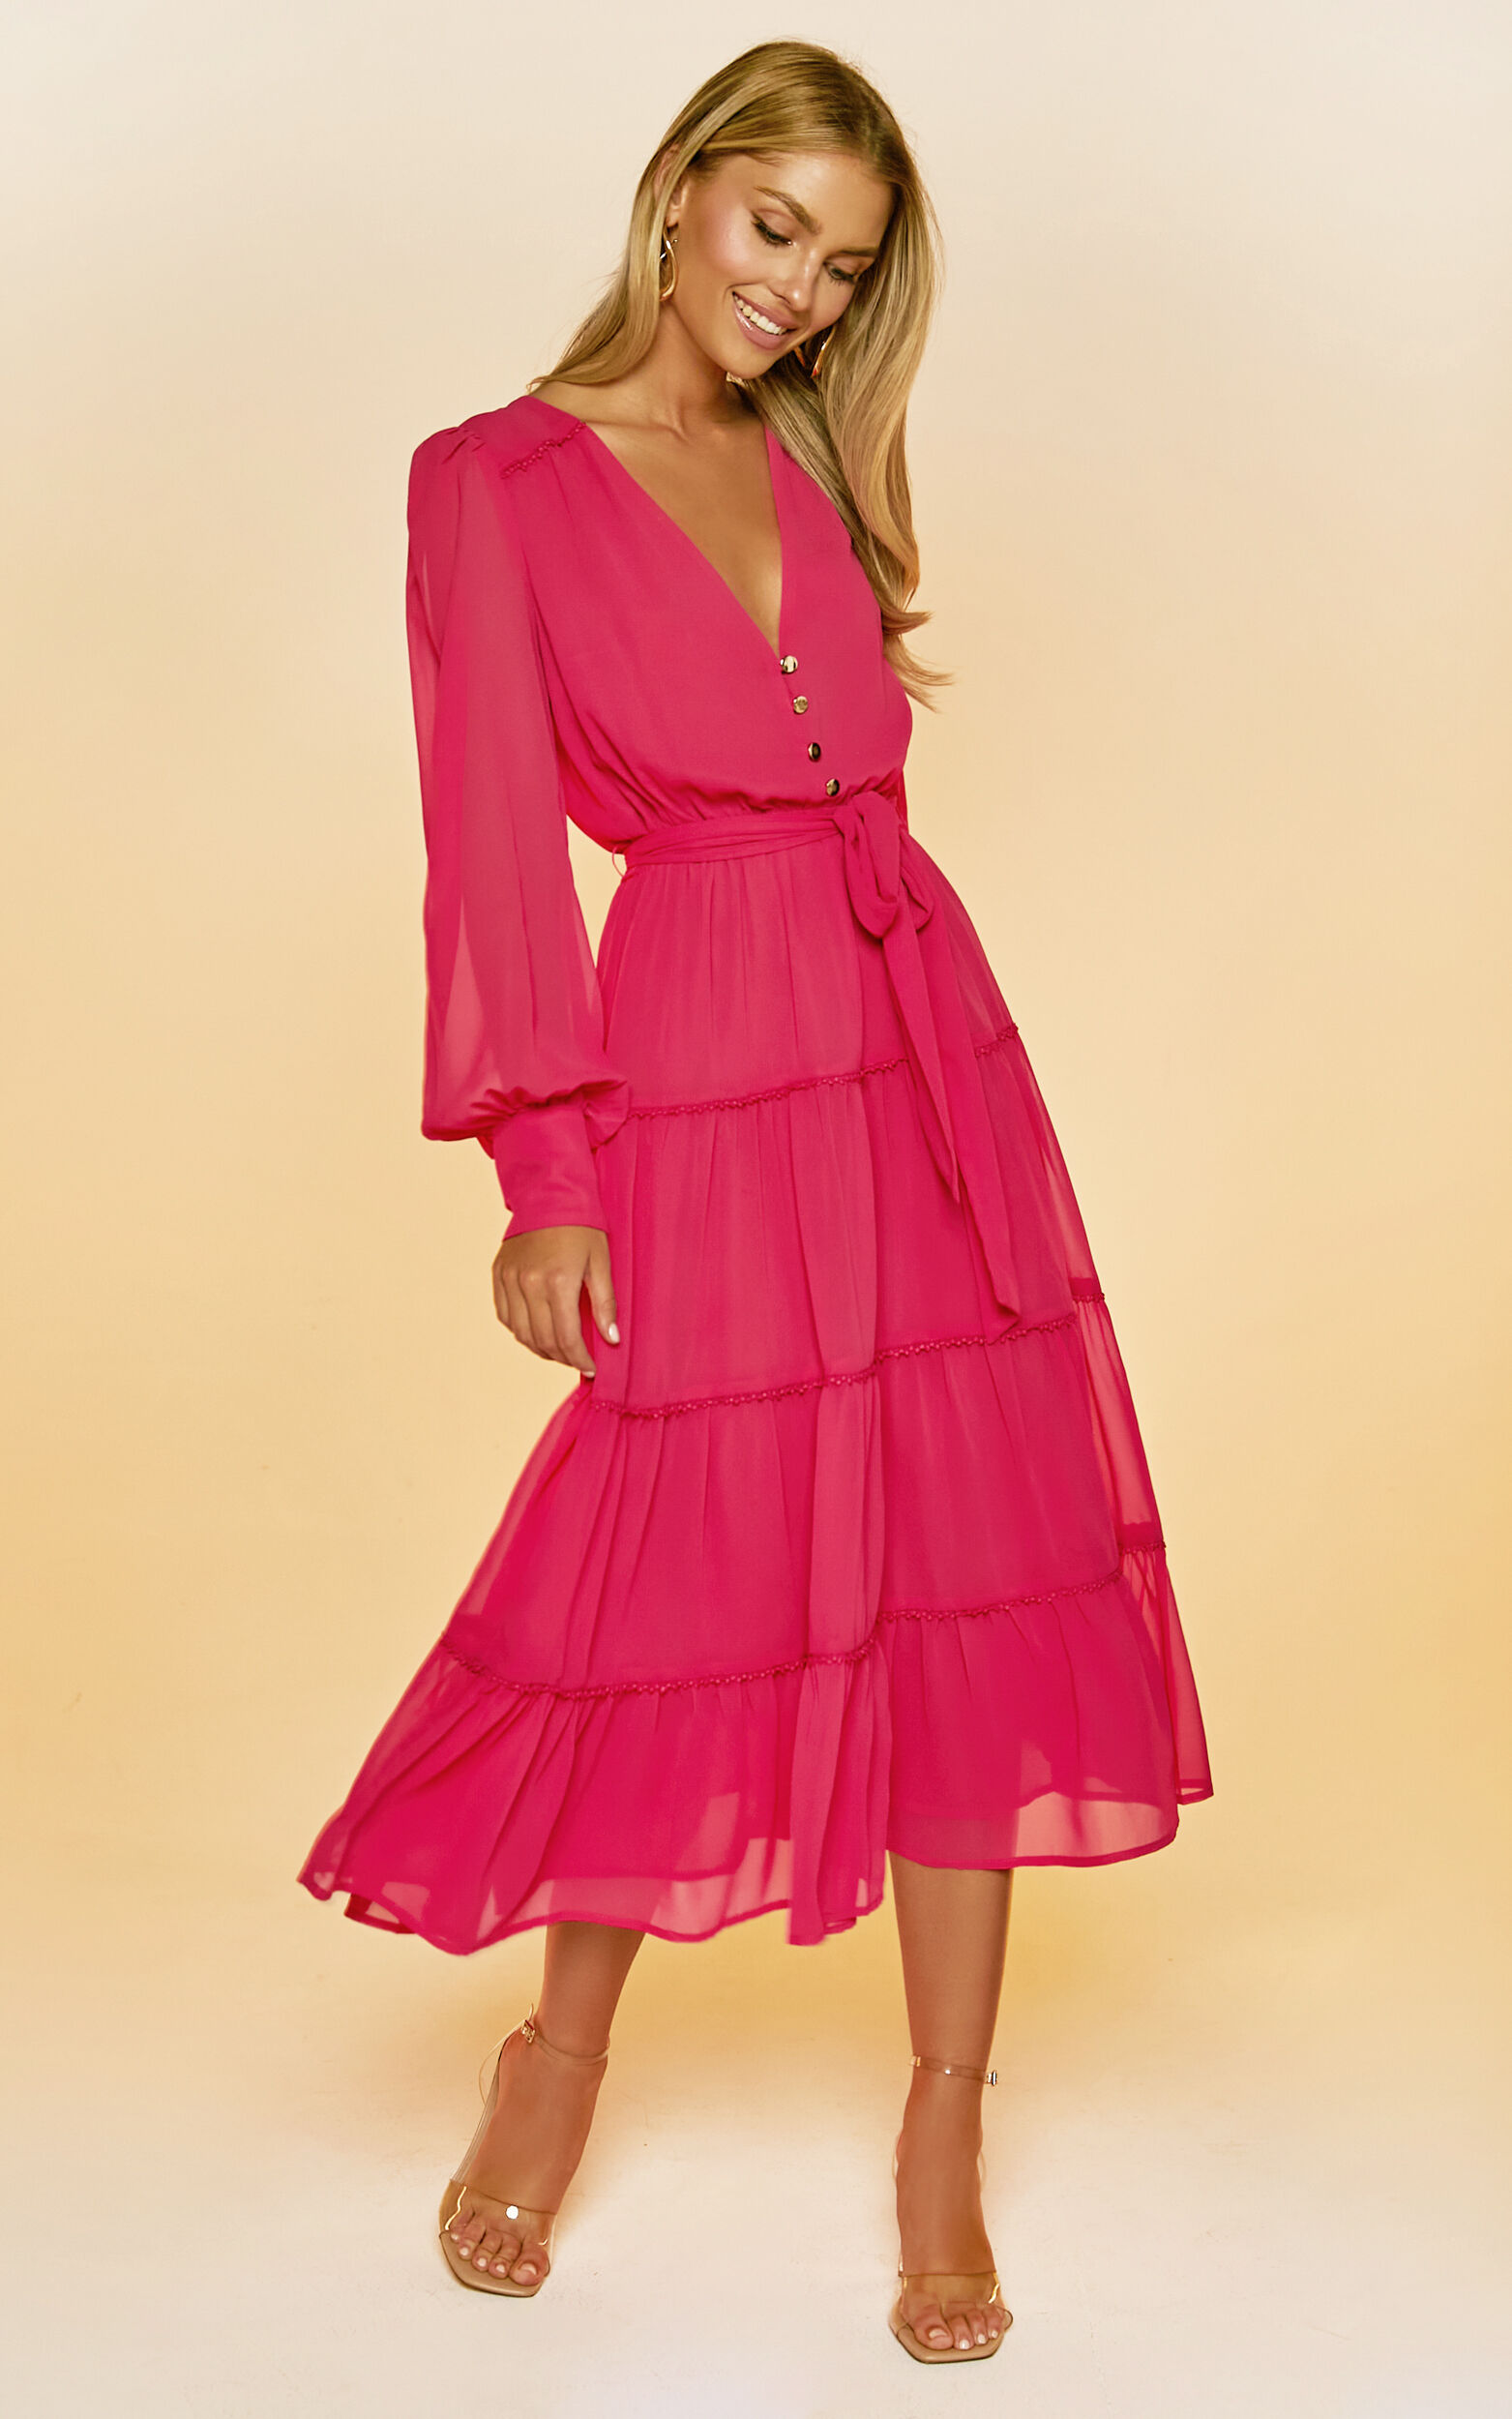 Wilson Midi Dress - Long Sleeve Tiered Dress in Hot Pink - 06, PNK1